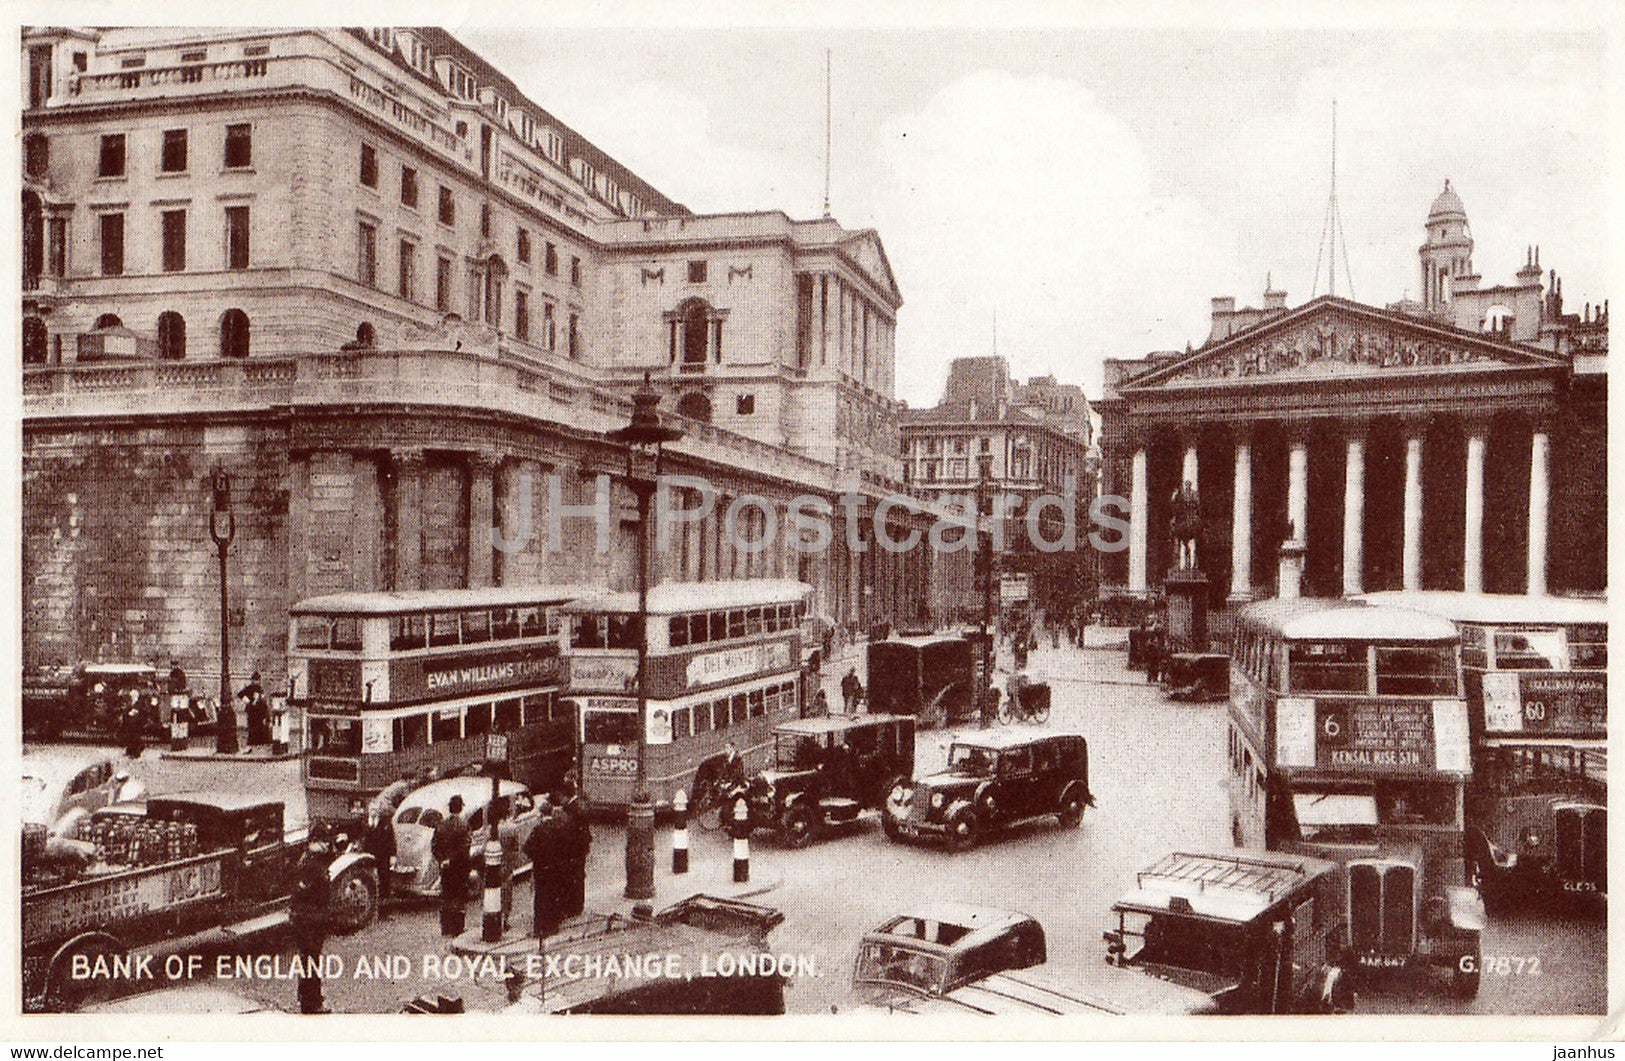 London - Bank of England and Royal Exchange - car - bus - 7872 - old postcard - England - United Kingdom - unused - JH Postcards